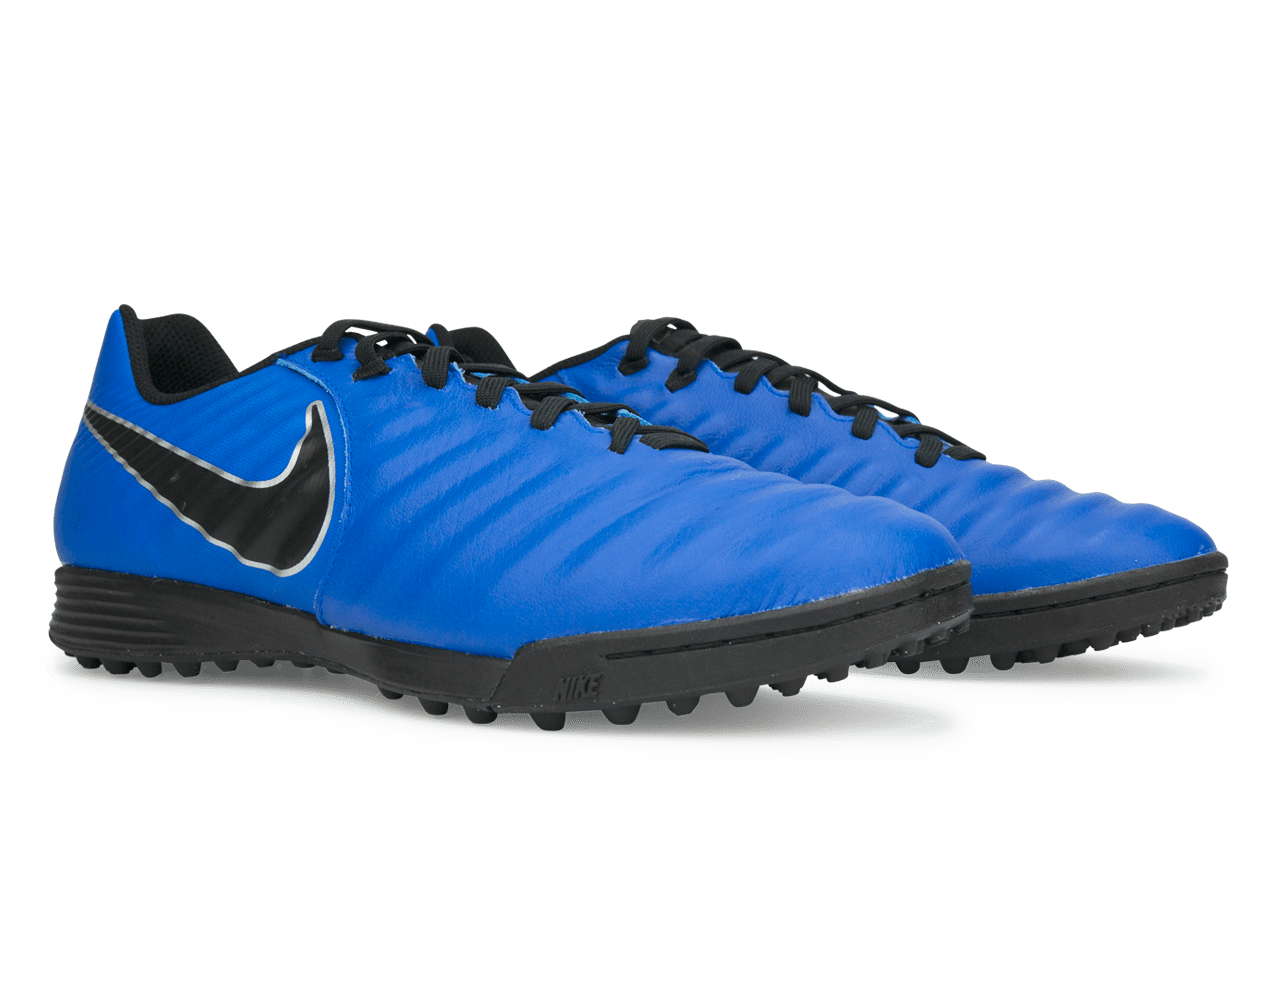 Nike Men's Tiempo Legend 7 Academy Turf Soccer Shoes Racer Blue/Metallic Silver